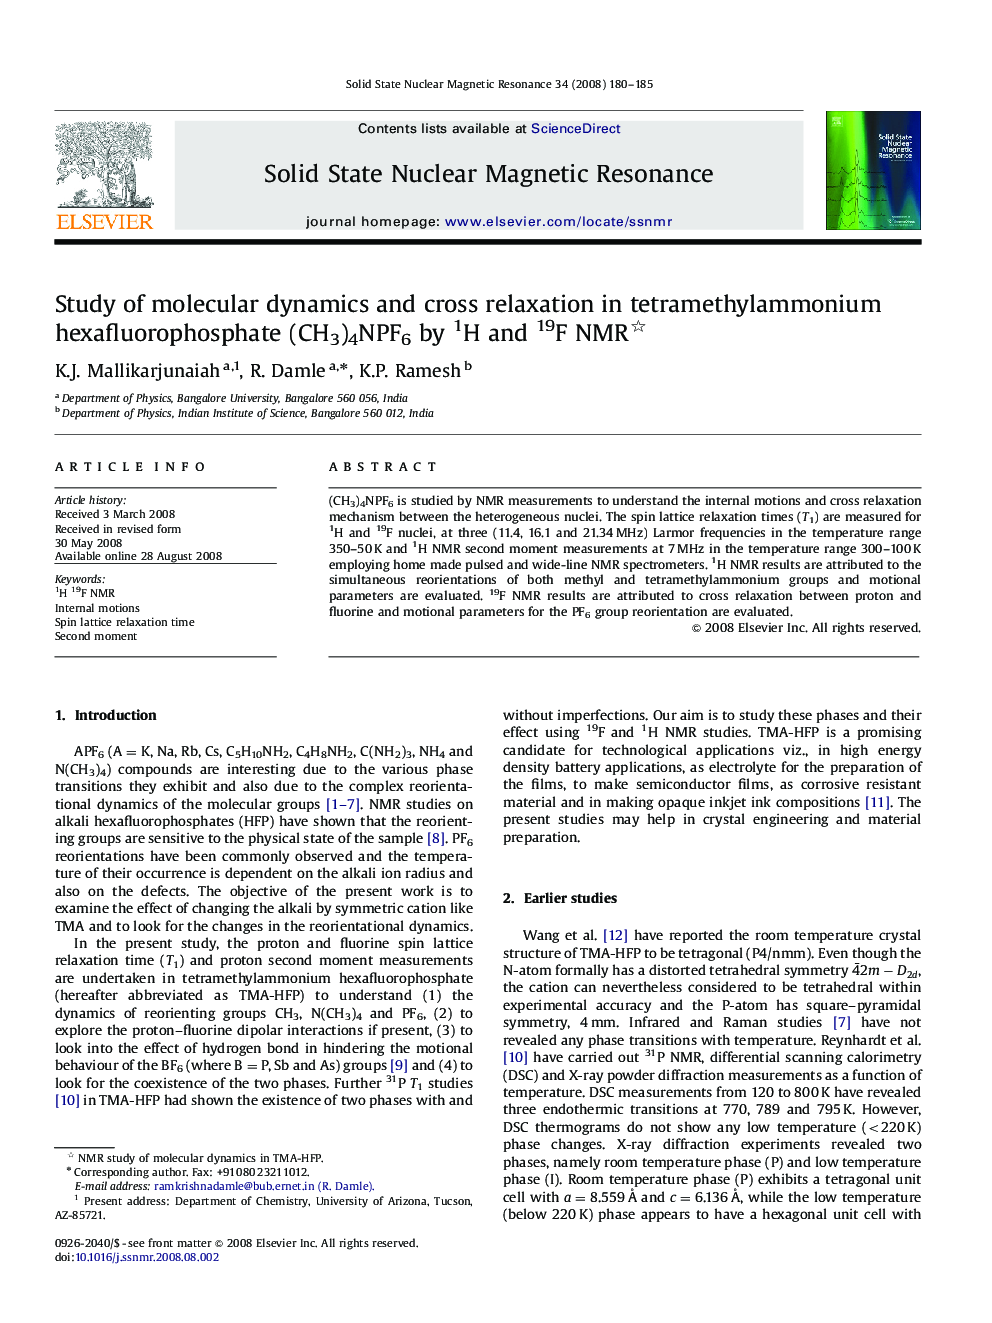 Study of molecular dynamics and cross relaxation in tetramethylammonium hexafluorophosphate (CH3)4NPF6 by 1H and 19F NMR